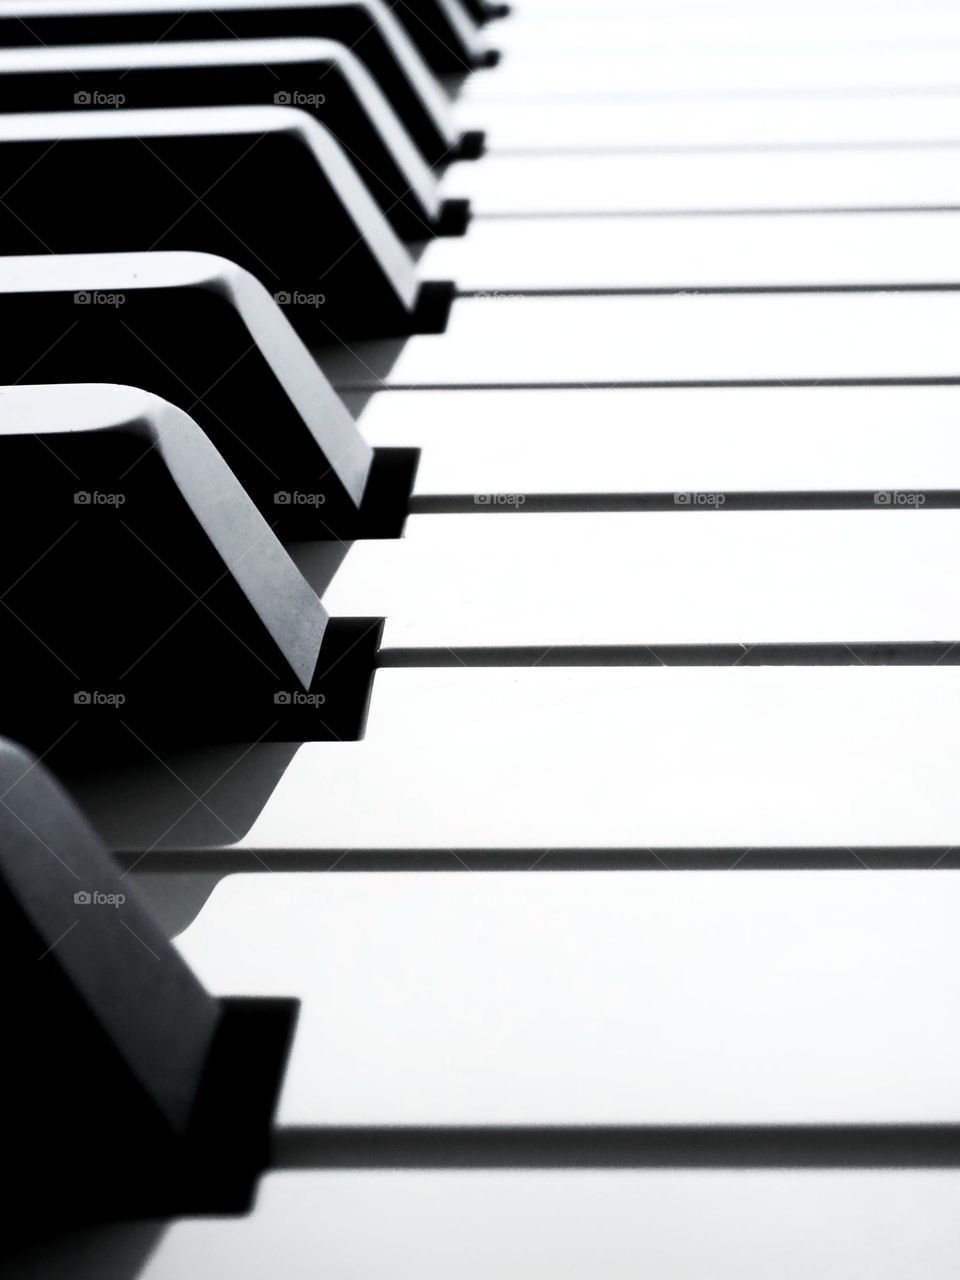 Black and White Piano keys close up